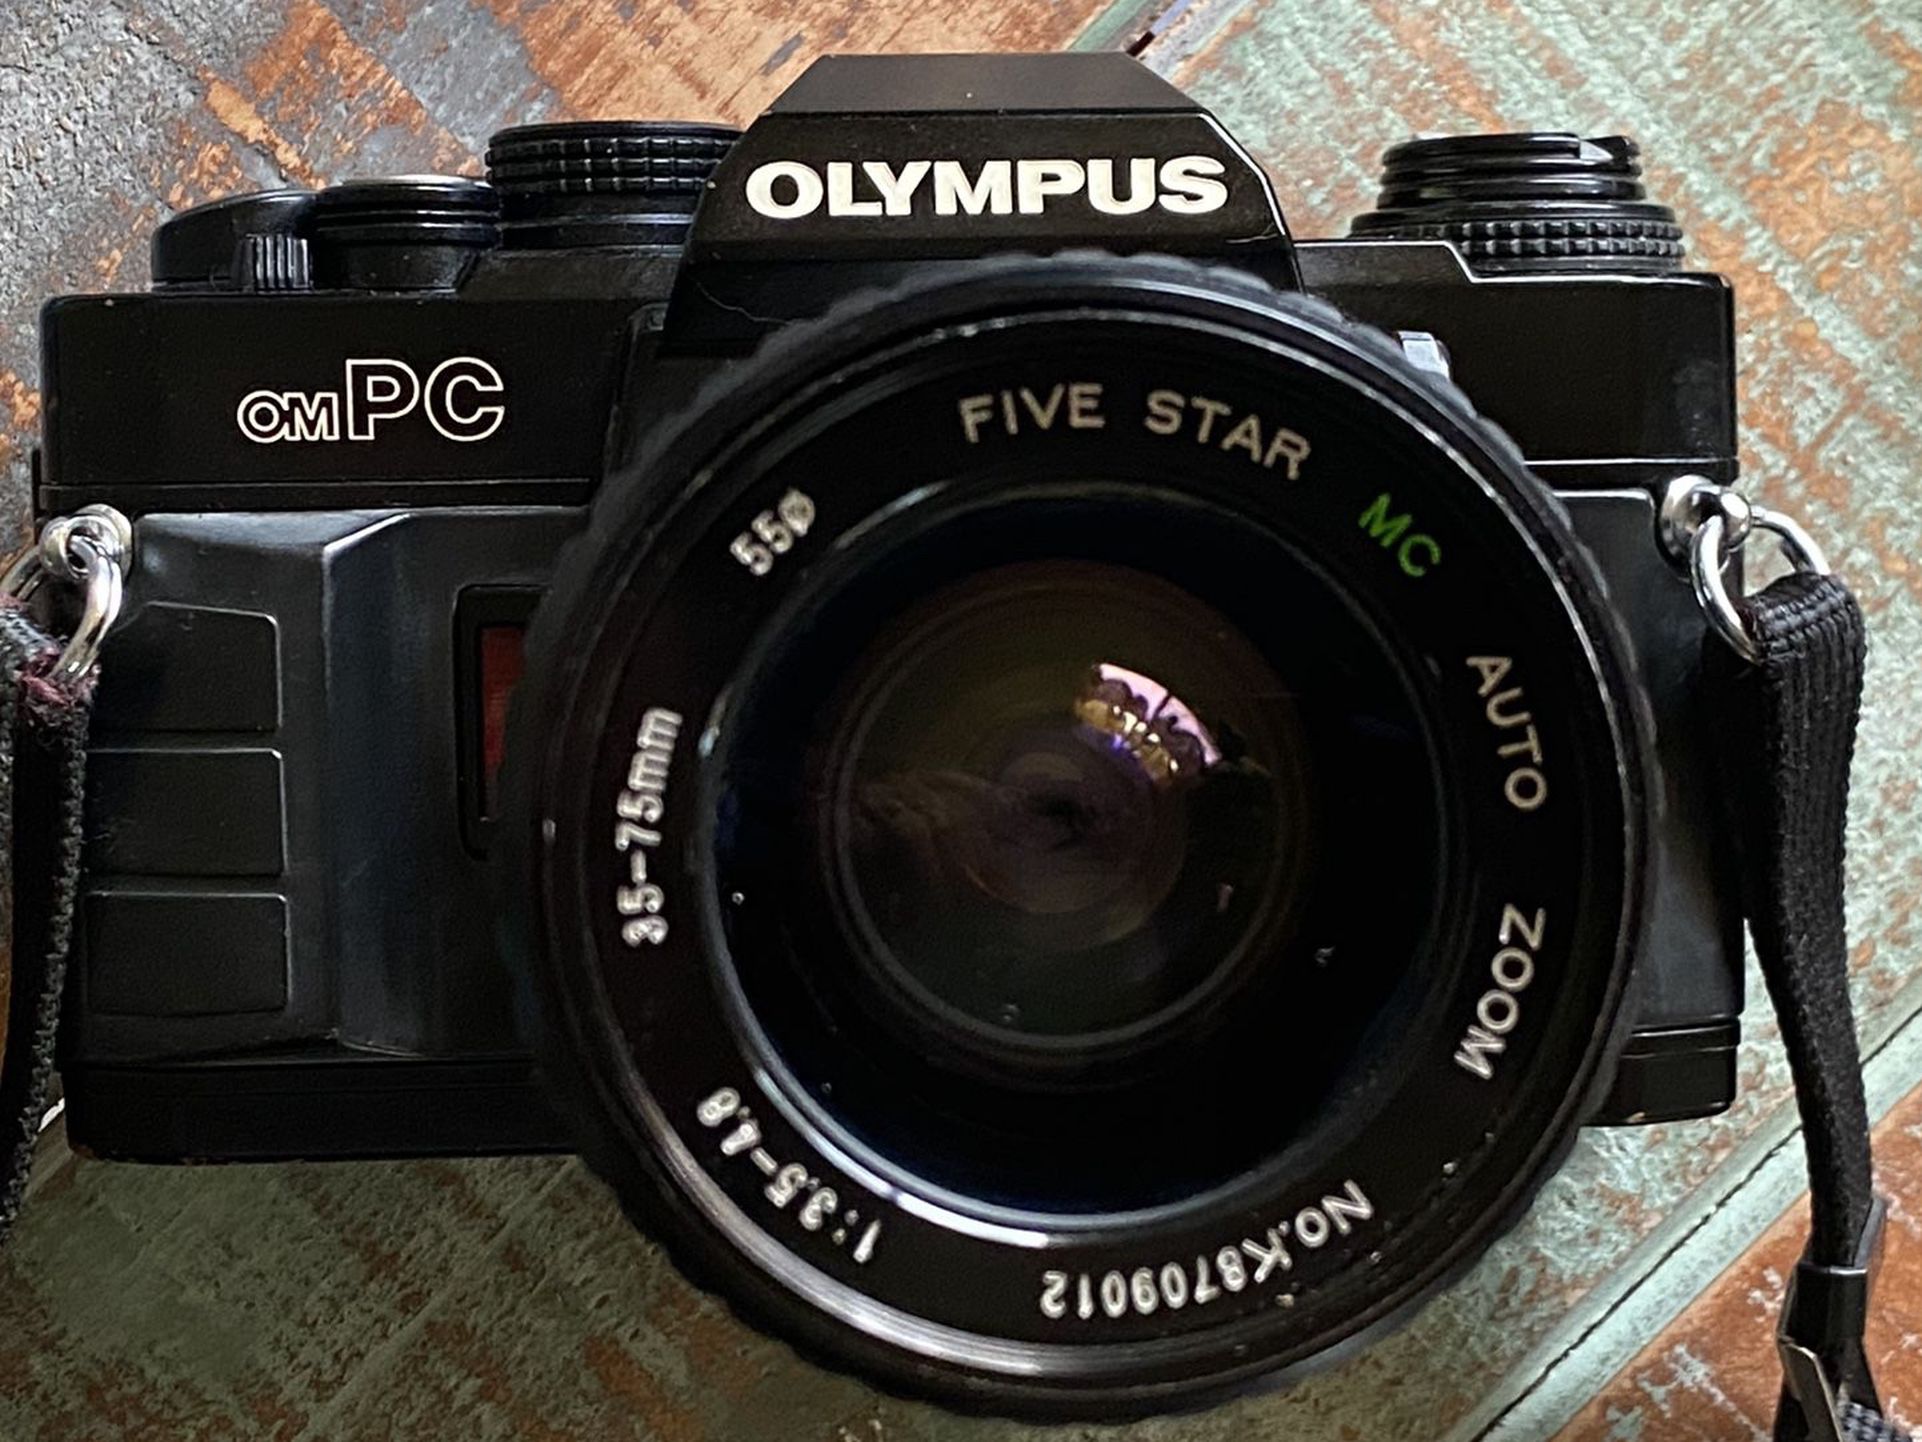 Olympus OM PC 35mm Film Camera